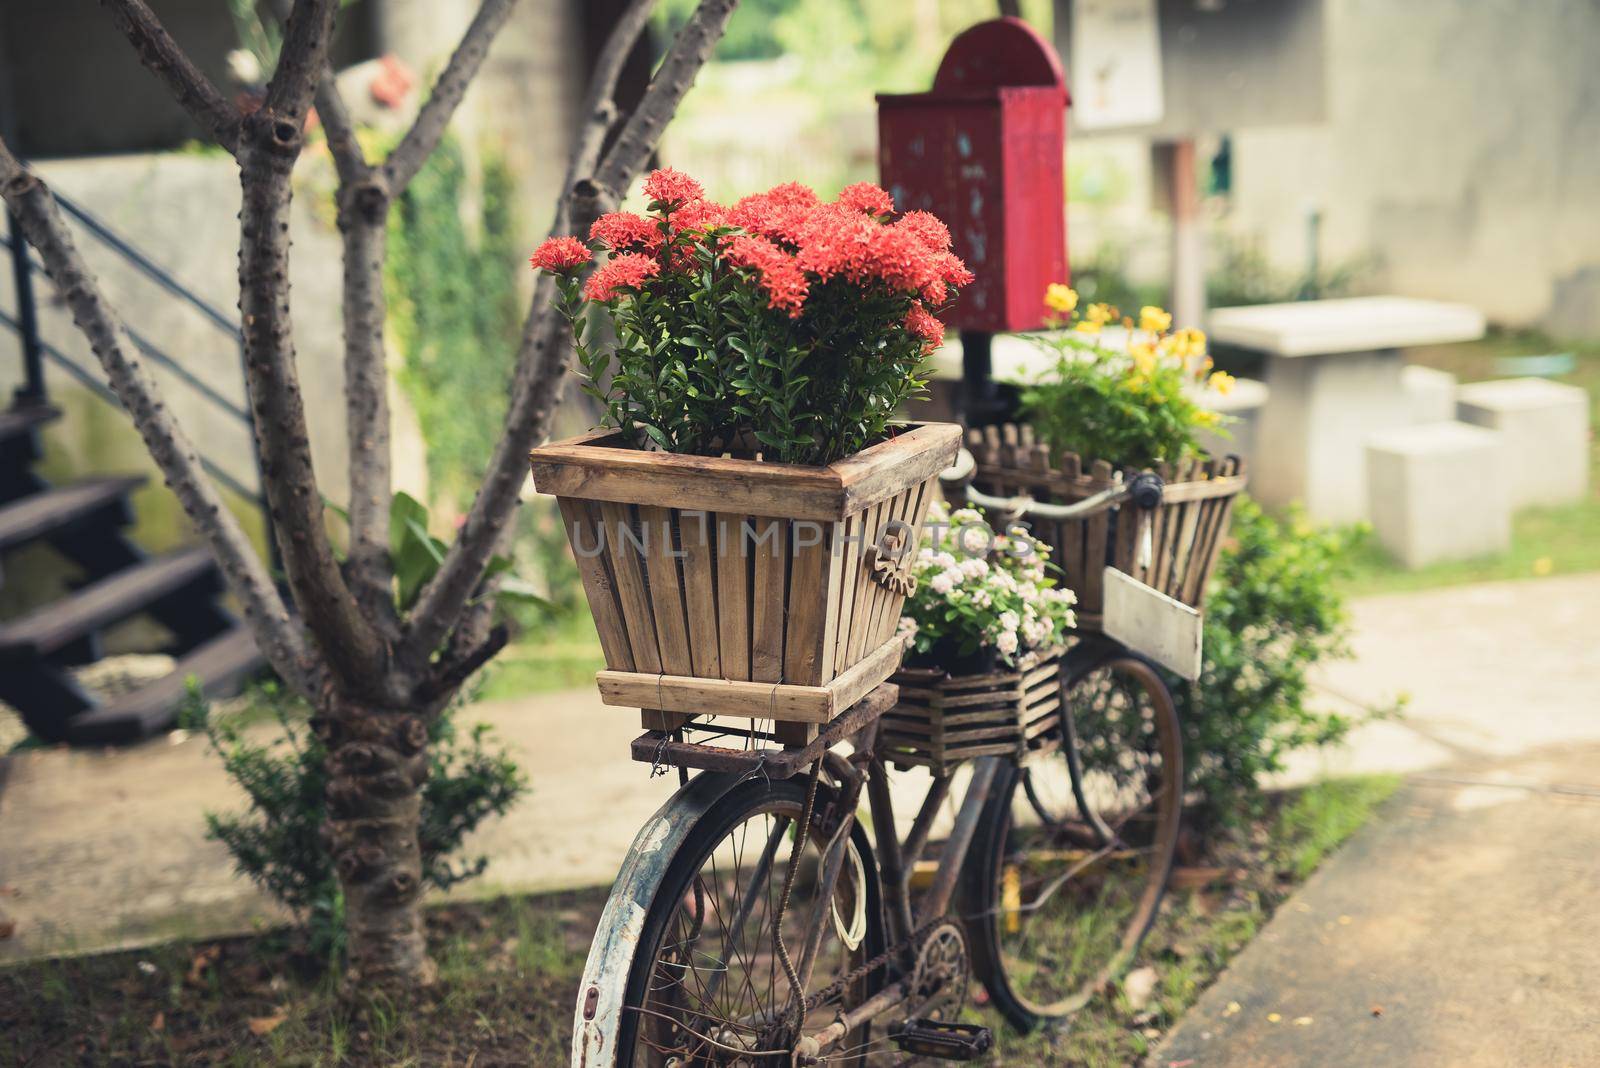 Vintage bicycle with flowers